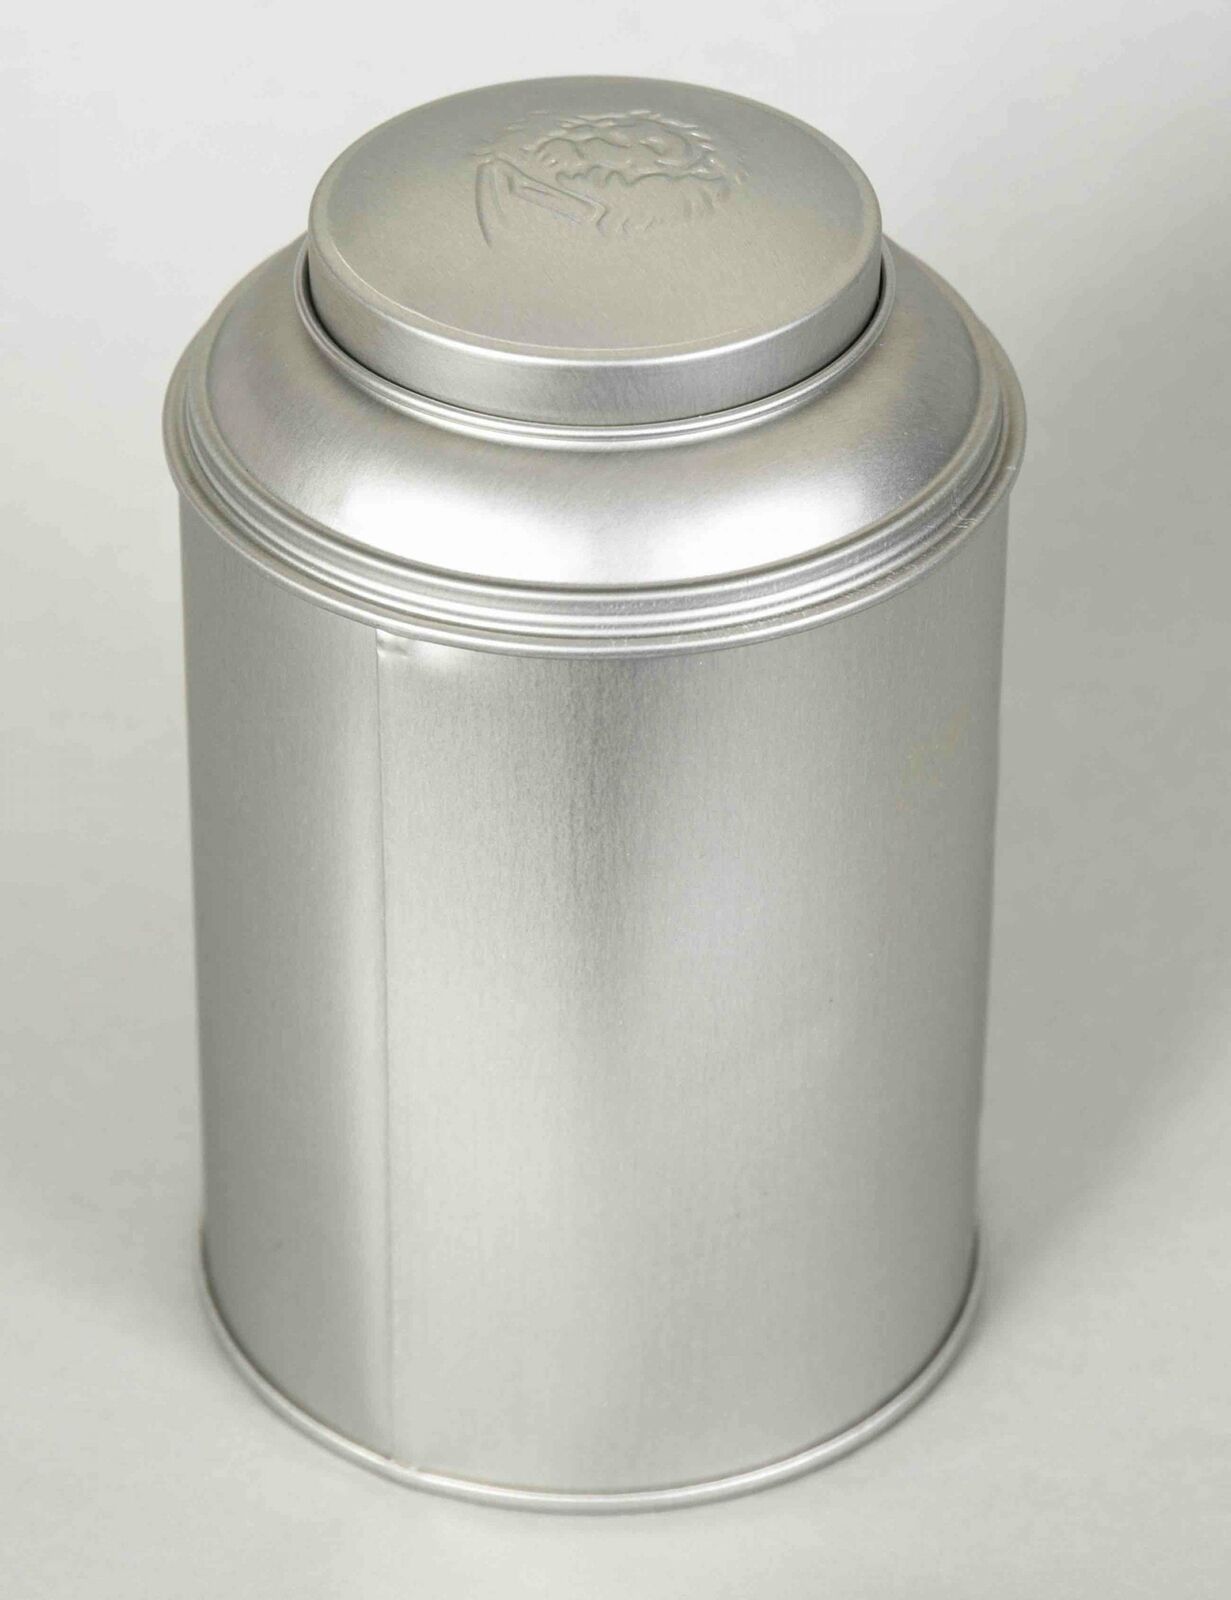 Proraso Powder Shaker Dispenser for PROFESSIONAL Use